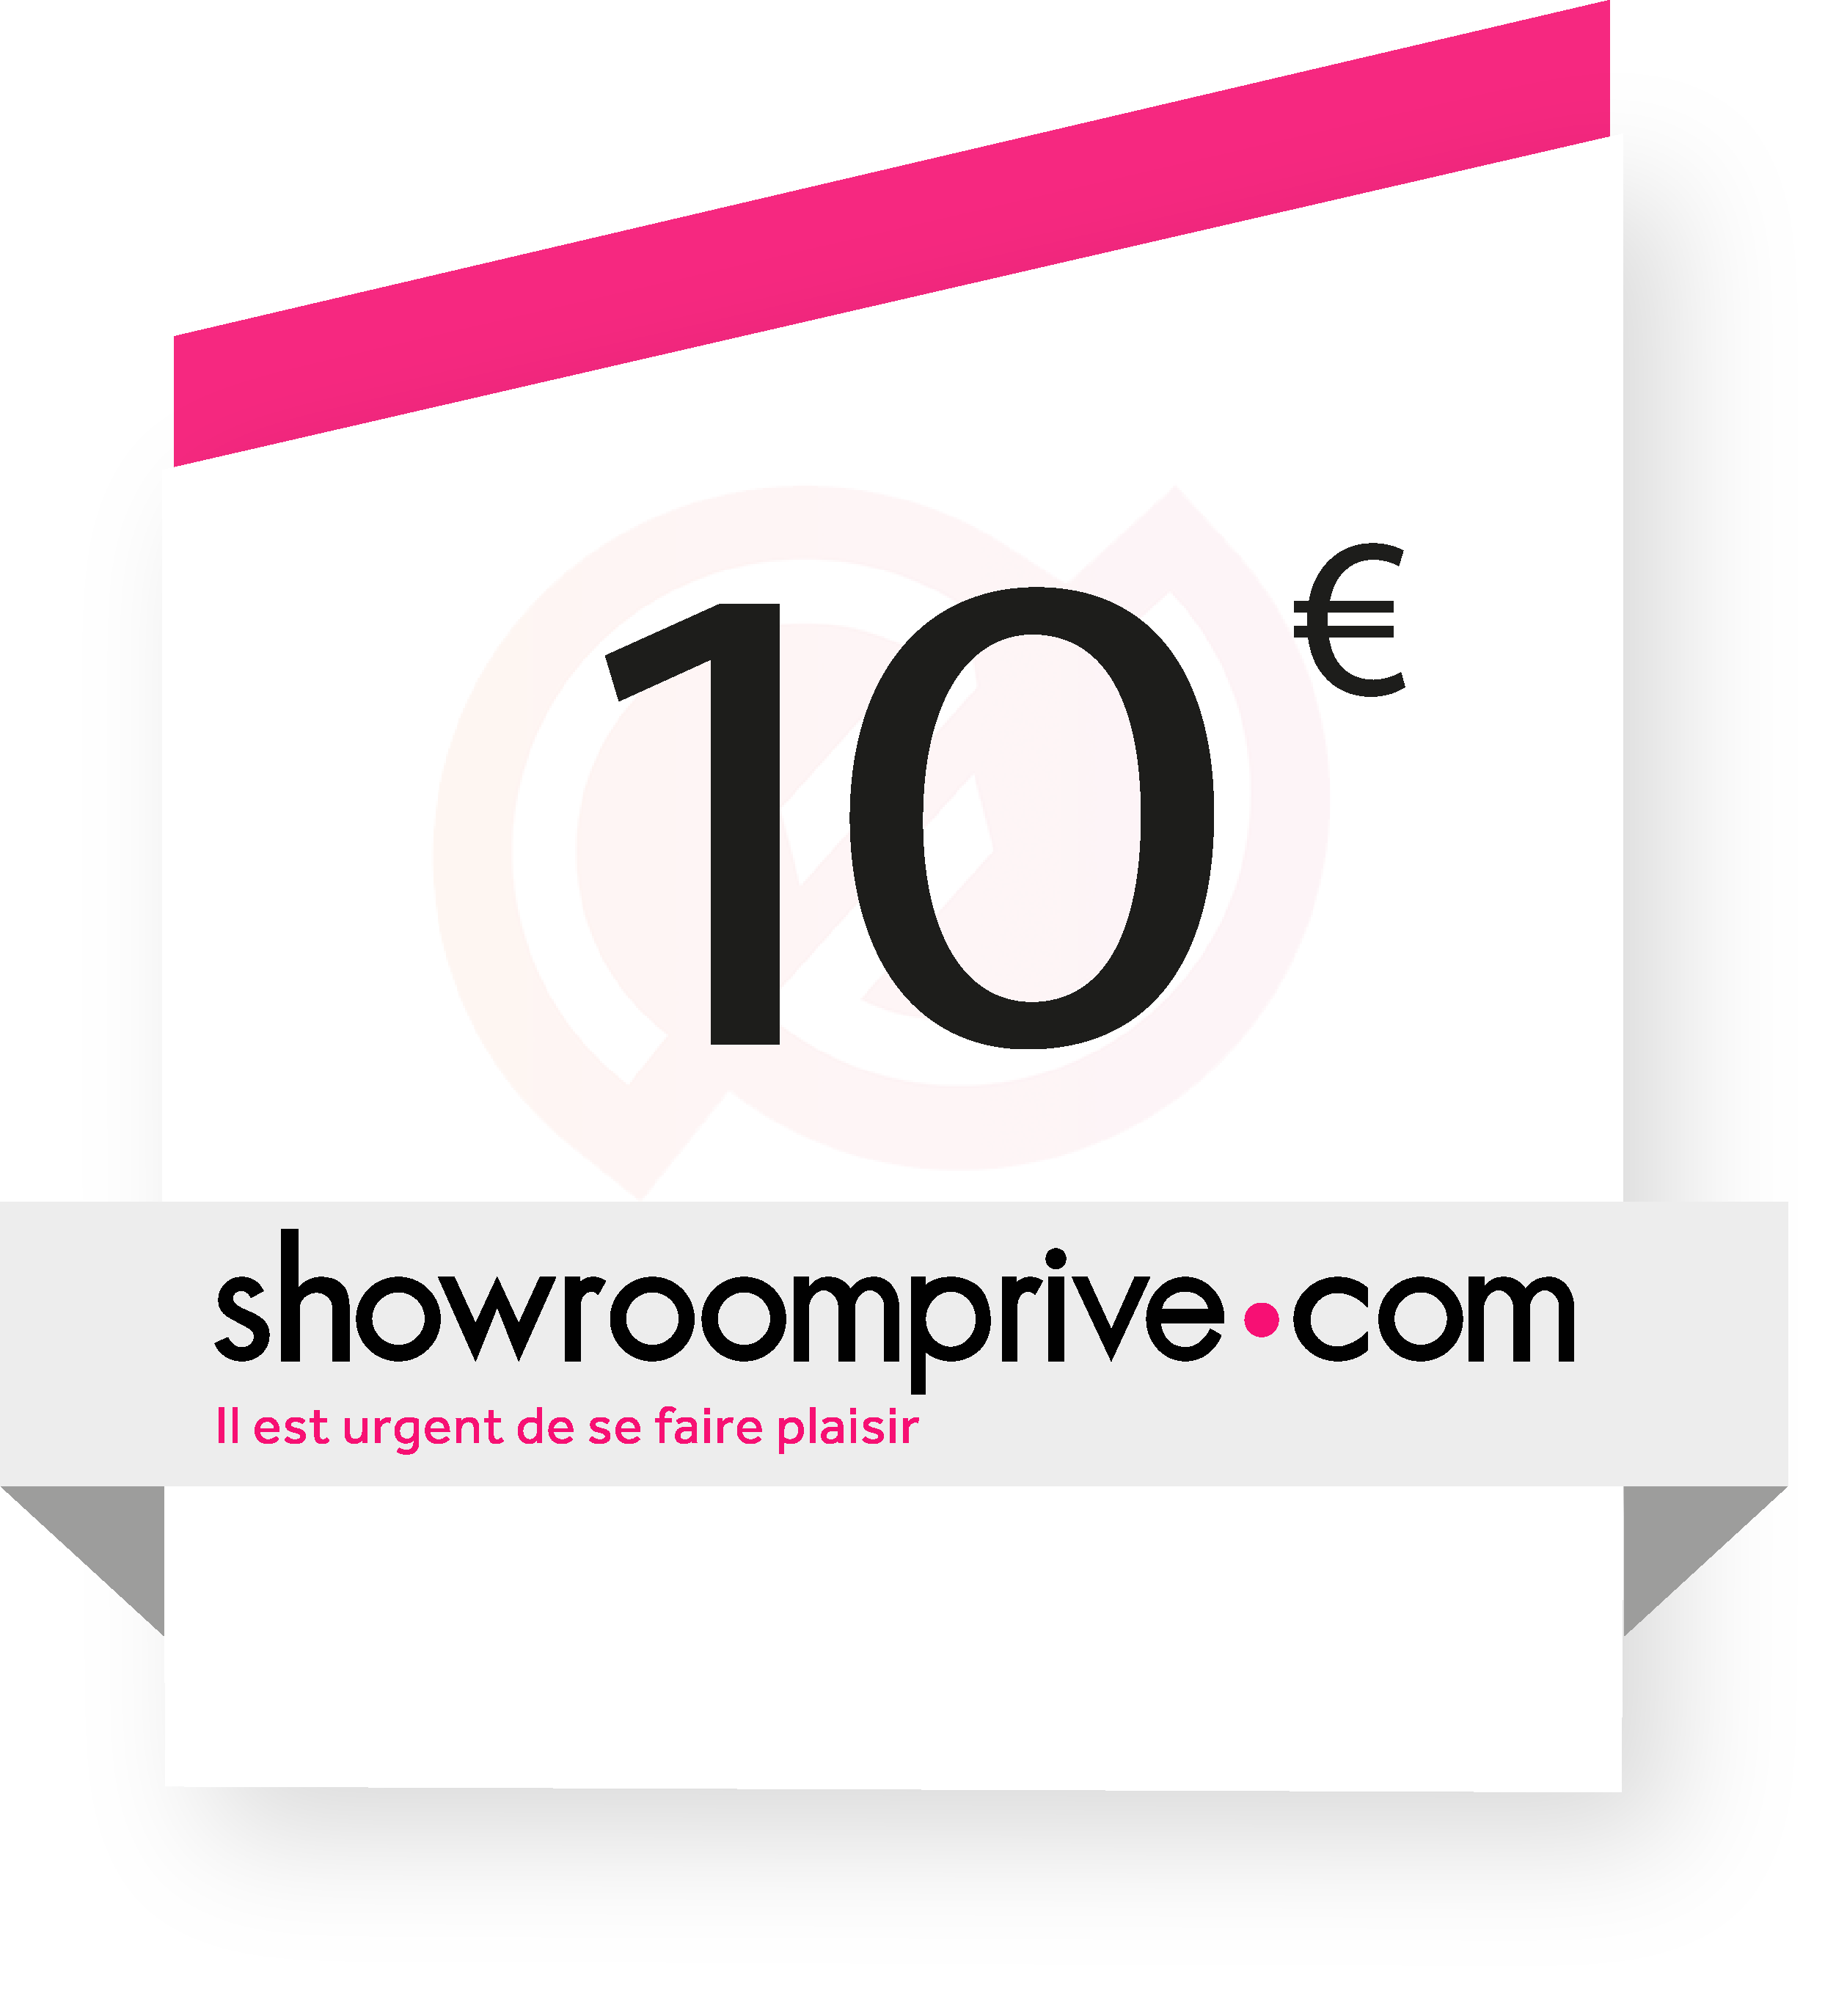 Showroomprivé.com 10€